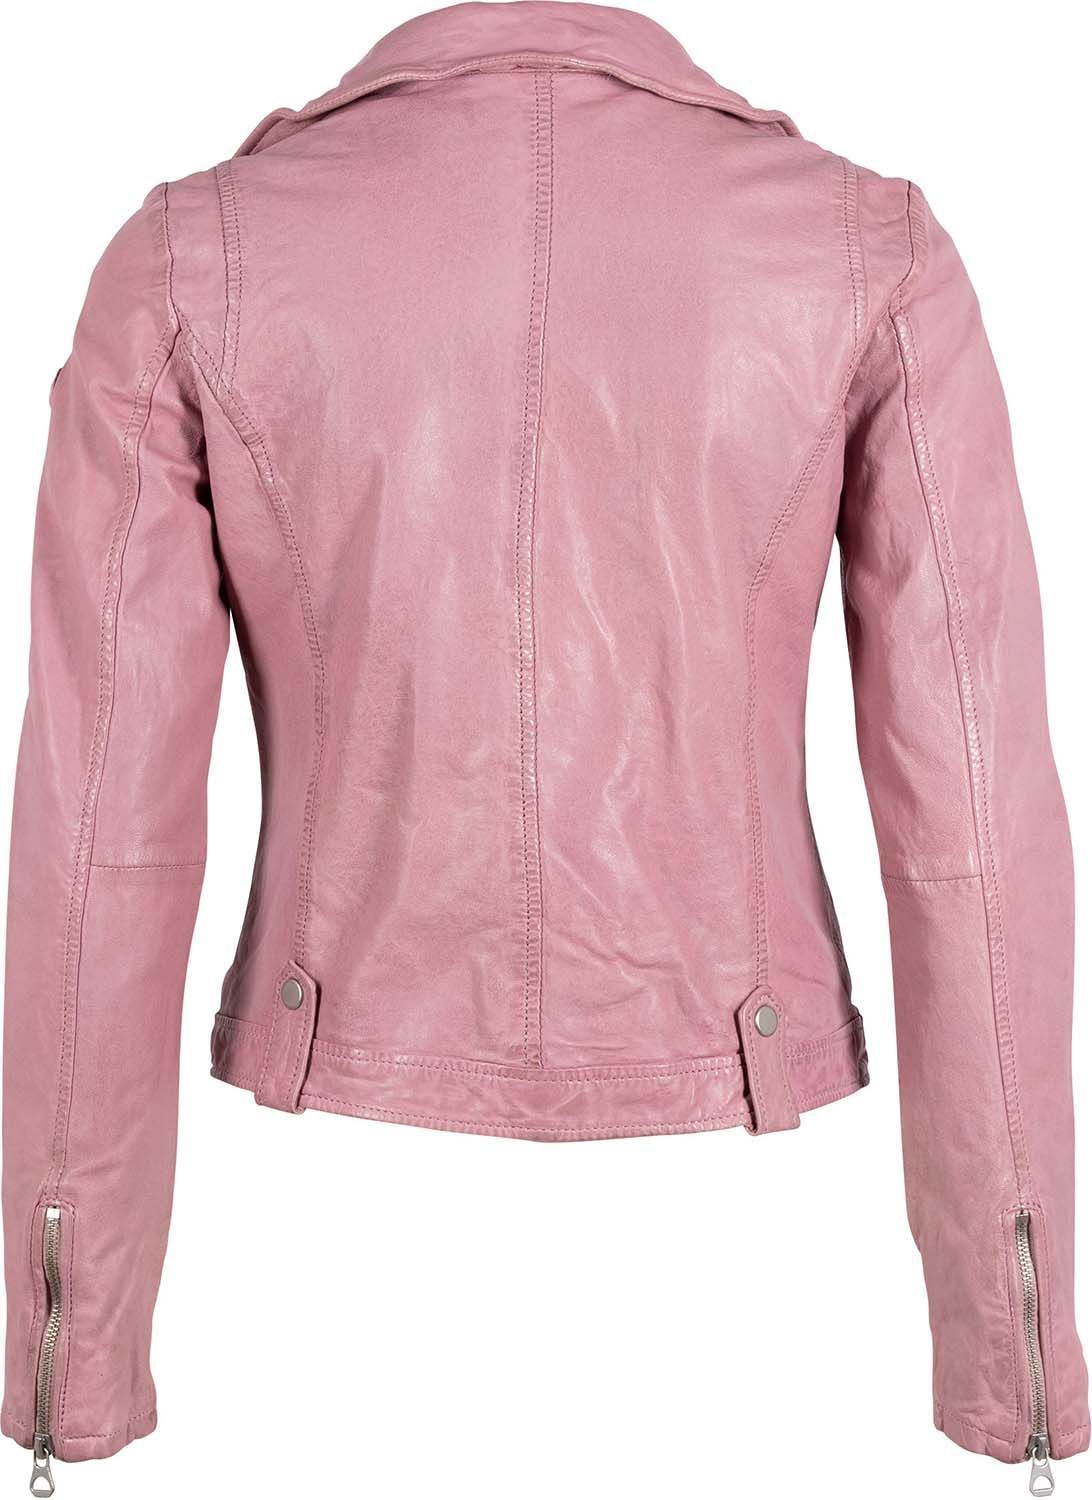 Gipsy Jacket Faible Roze